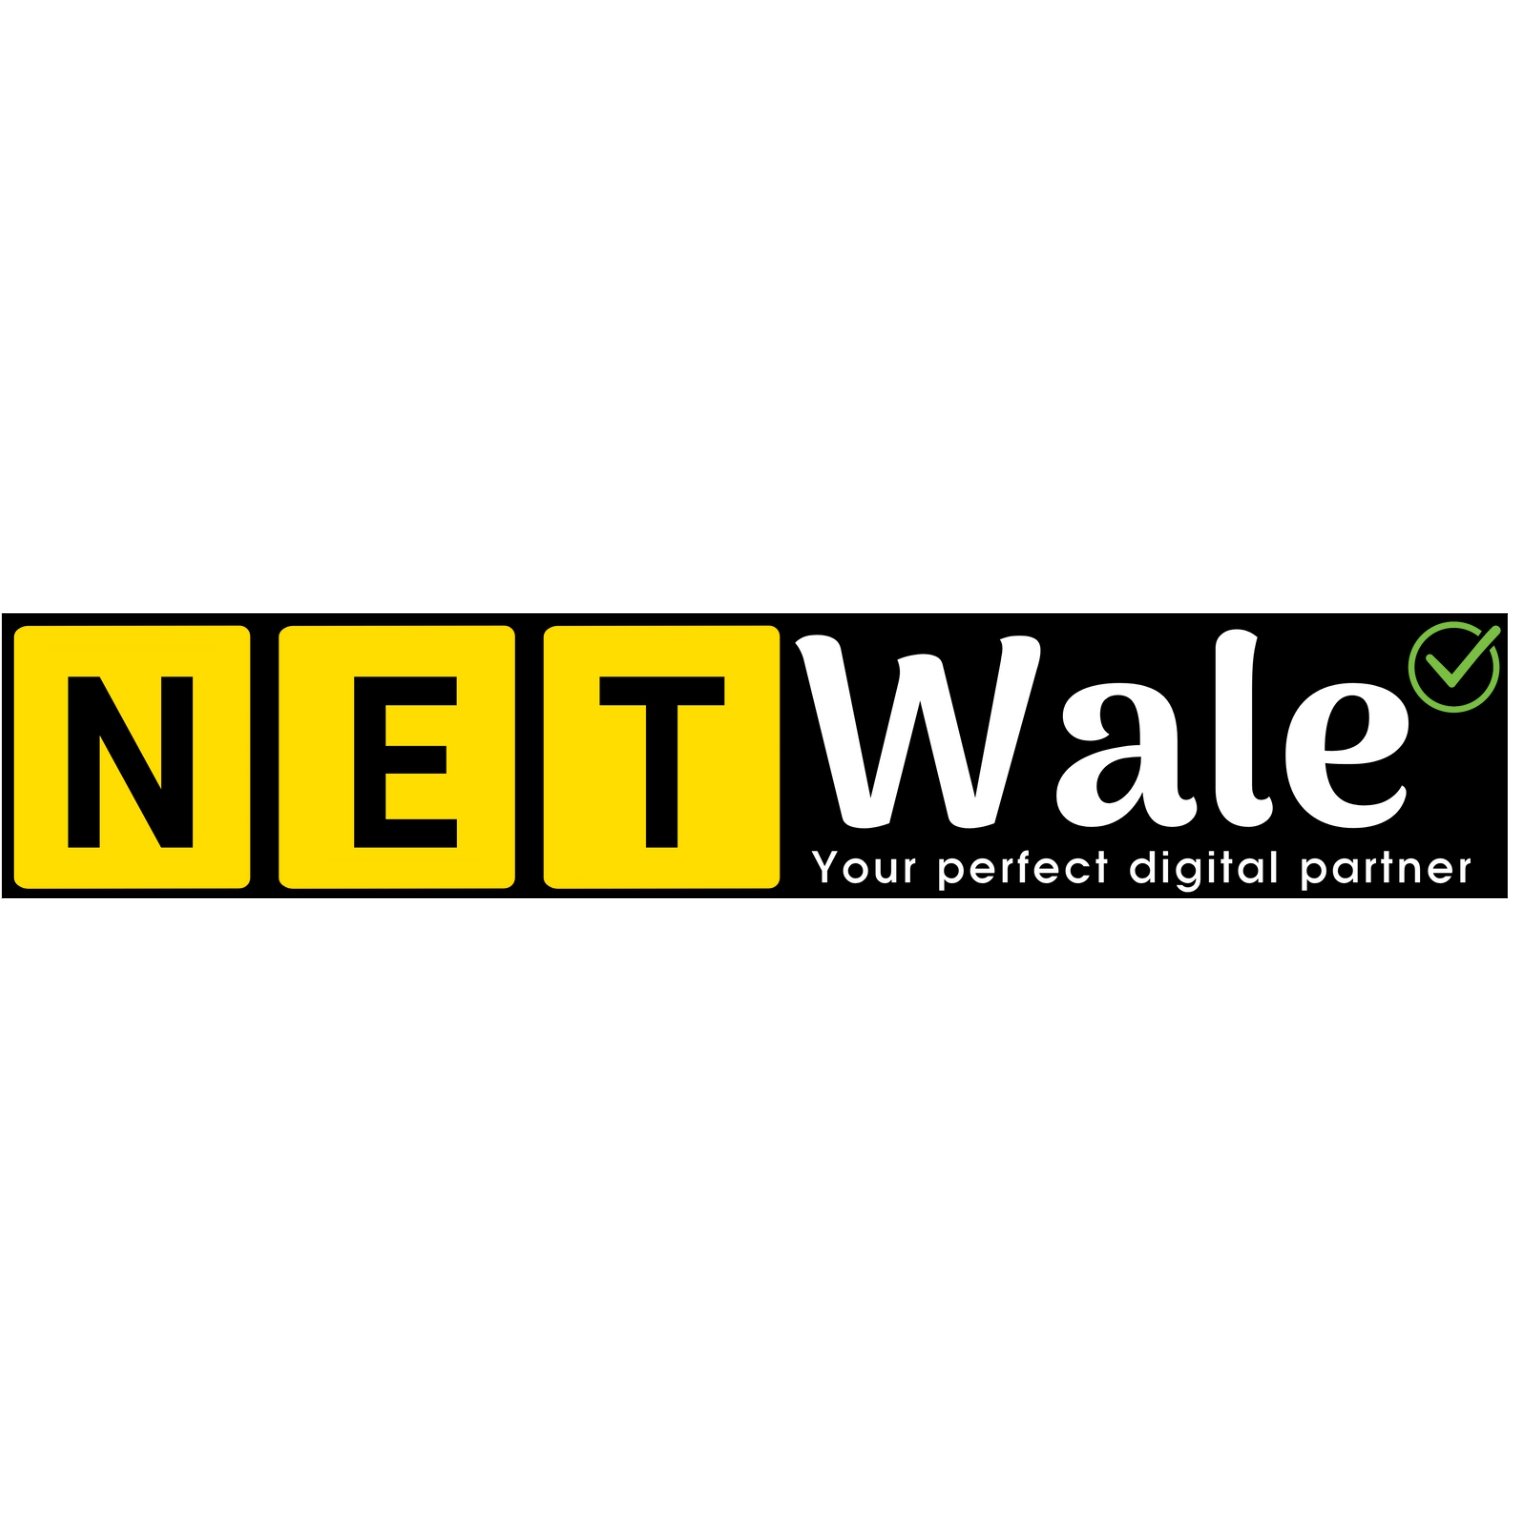 Netwale|Legal Services|Professional Services